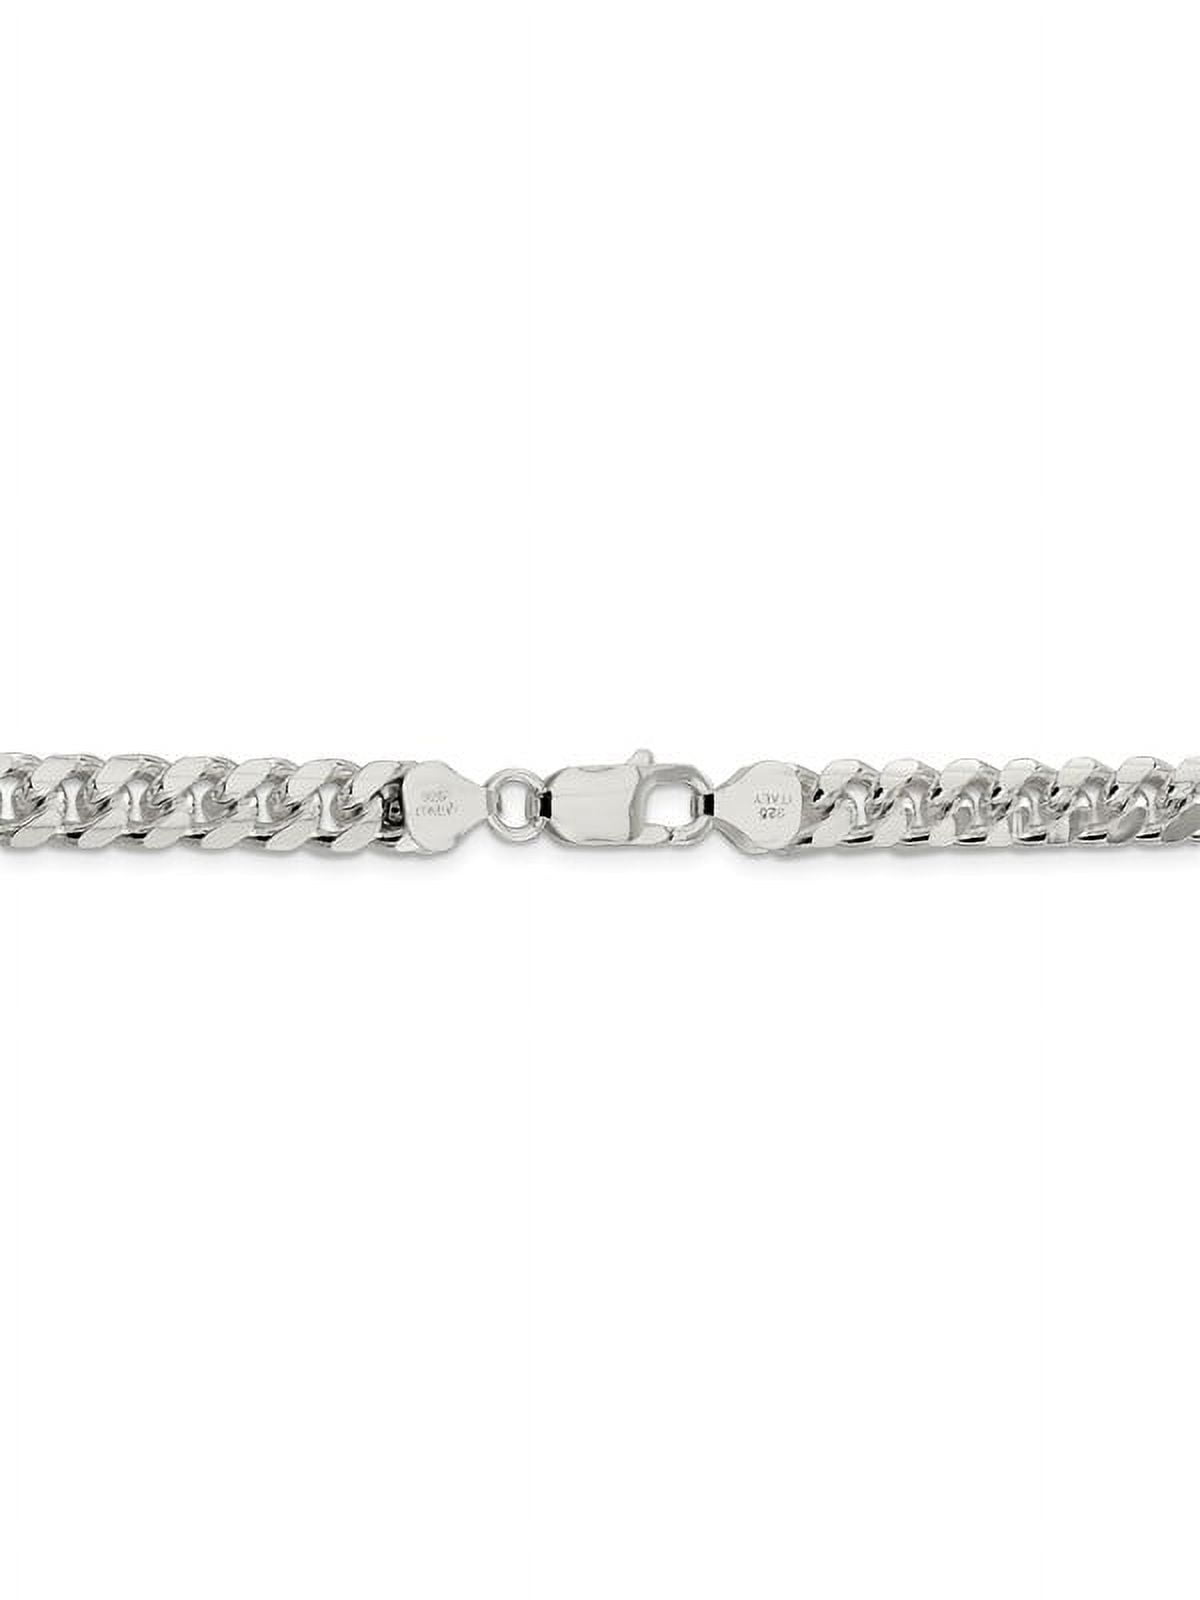 Bracelets in Jewelry Stainless Steel Herringbone Flat Chain  Bracelets/Anklets BeautifulSummer Jewelry Gold/Silver Plated  6.3inch/5.9inch Adjustable Bracelets for Women 